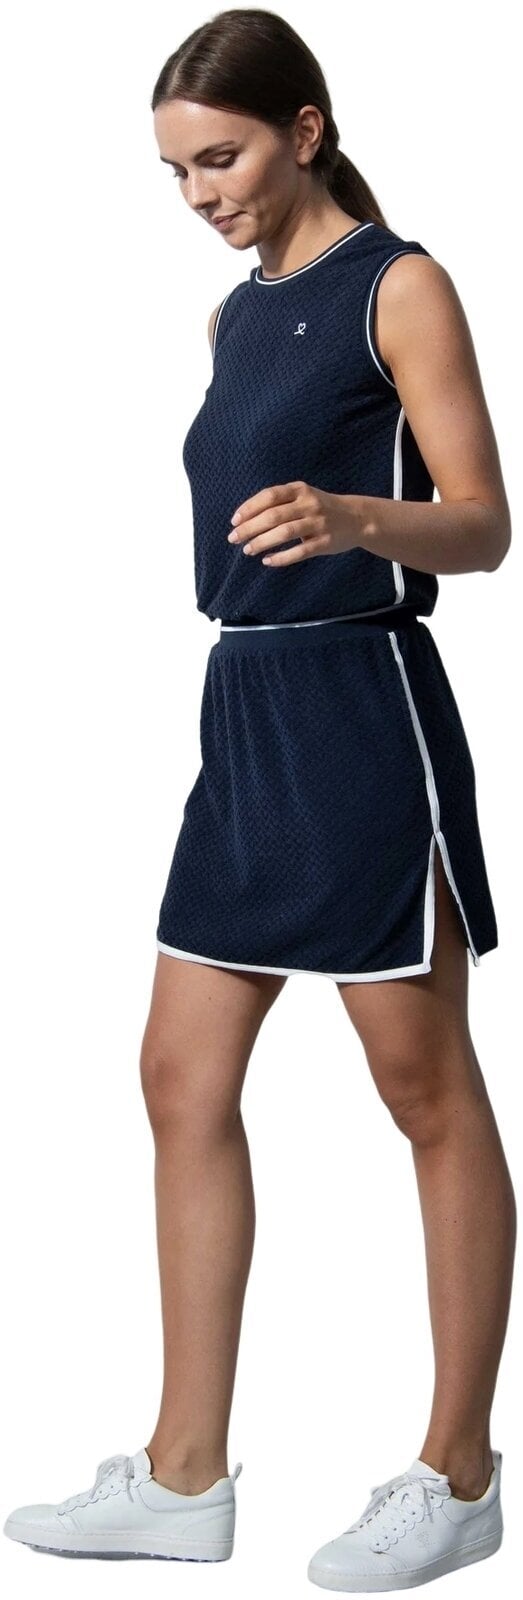 Skirt / Dress Daily Sports Brisbane Sleeveless Dress Navy M